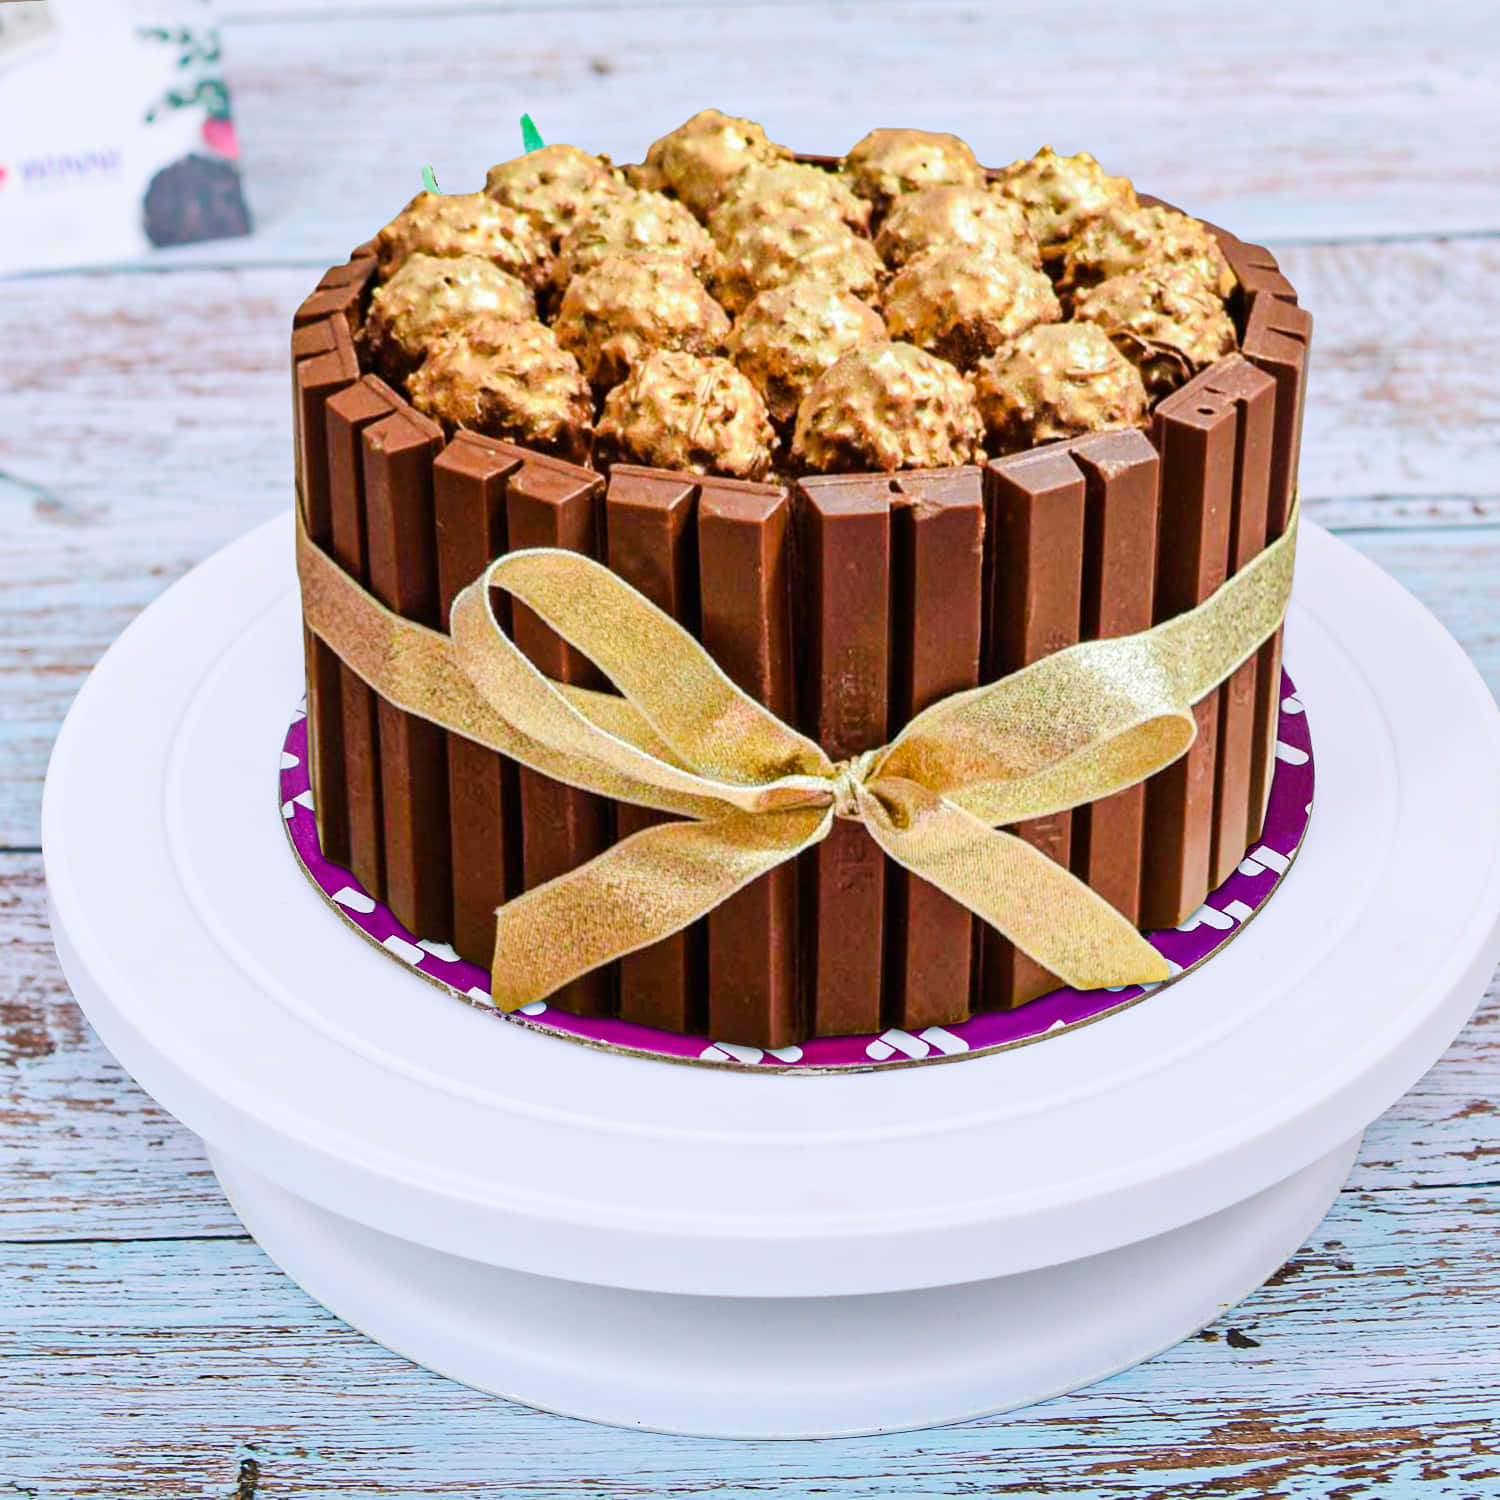 Ferrero Rocher Mousse Cake (Nutella Mousse Cake)